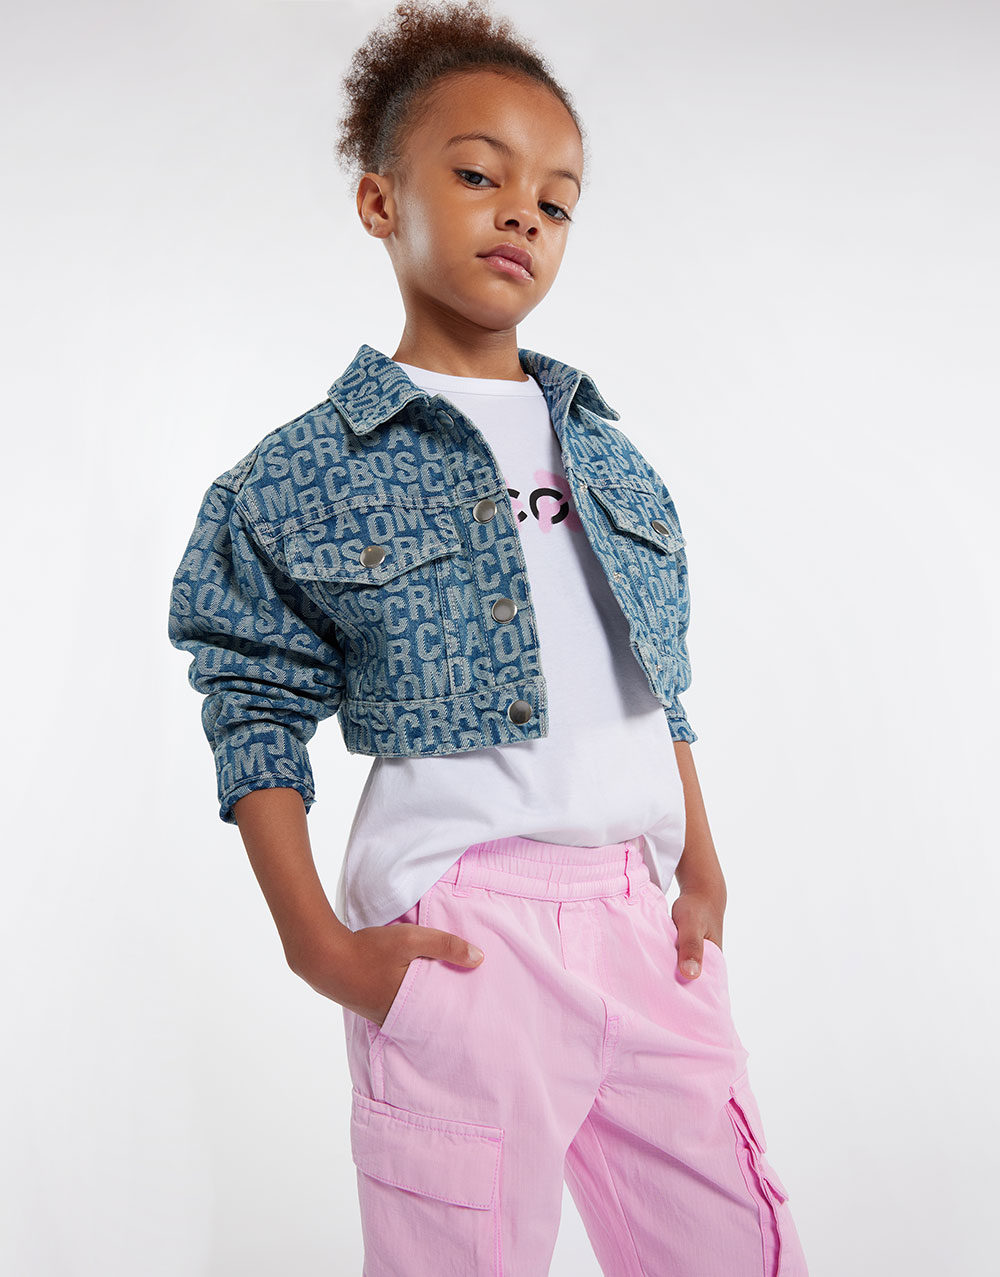 children's clothing from luxury brand Marc Jacobs, denim jacket